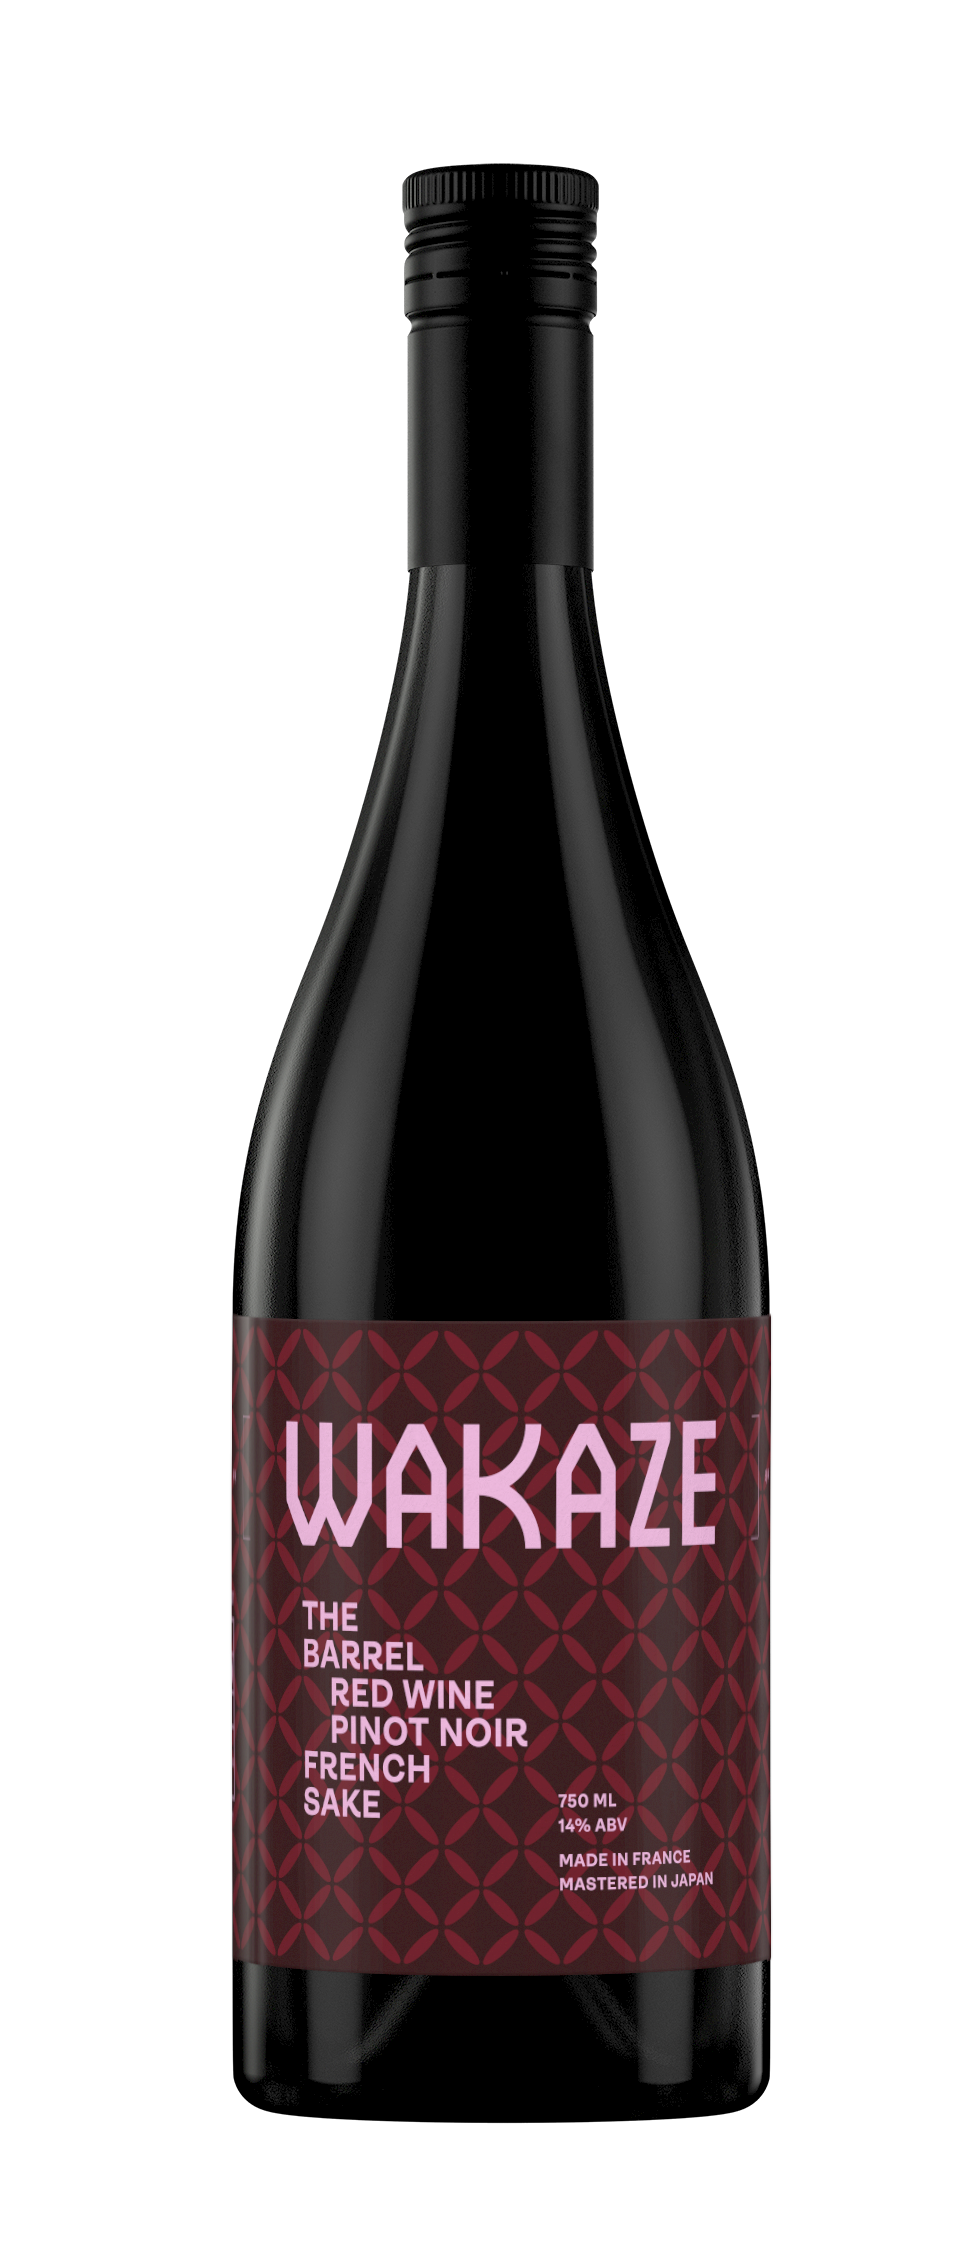 WAKAZE Online Store